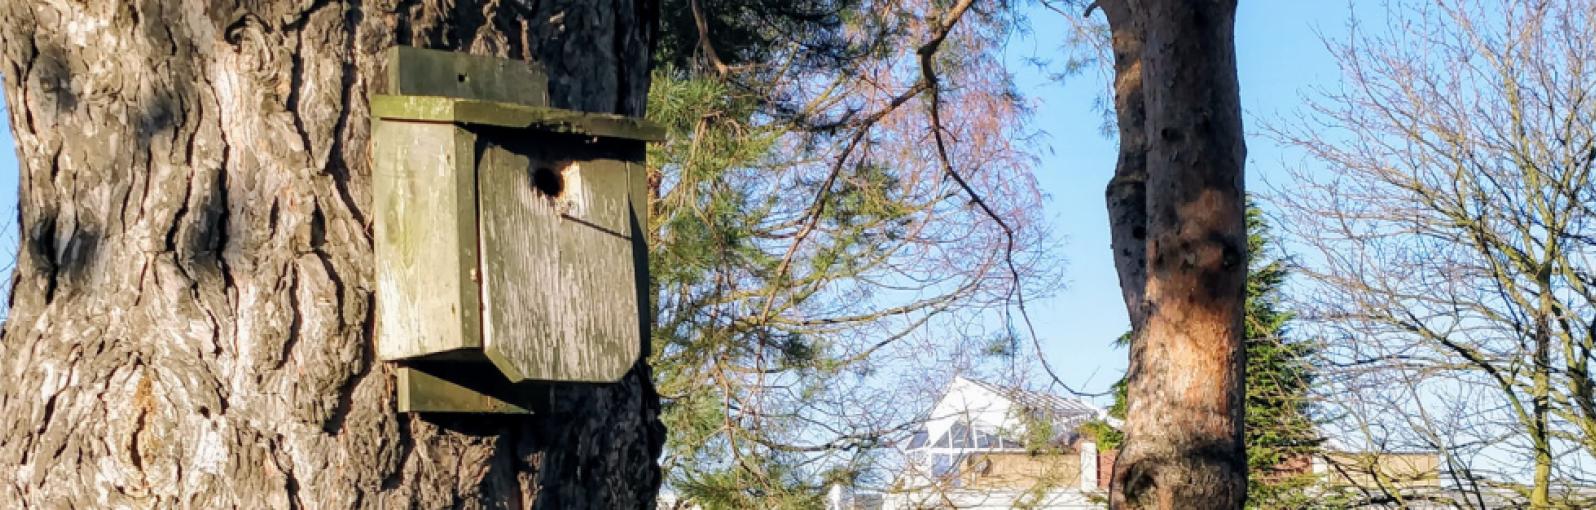 Bird box on tree